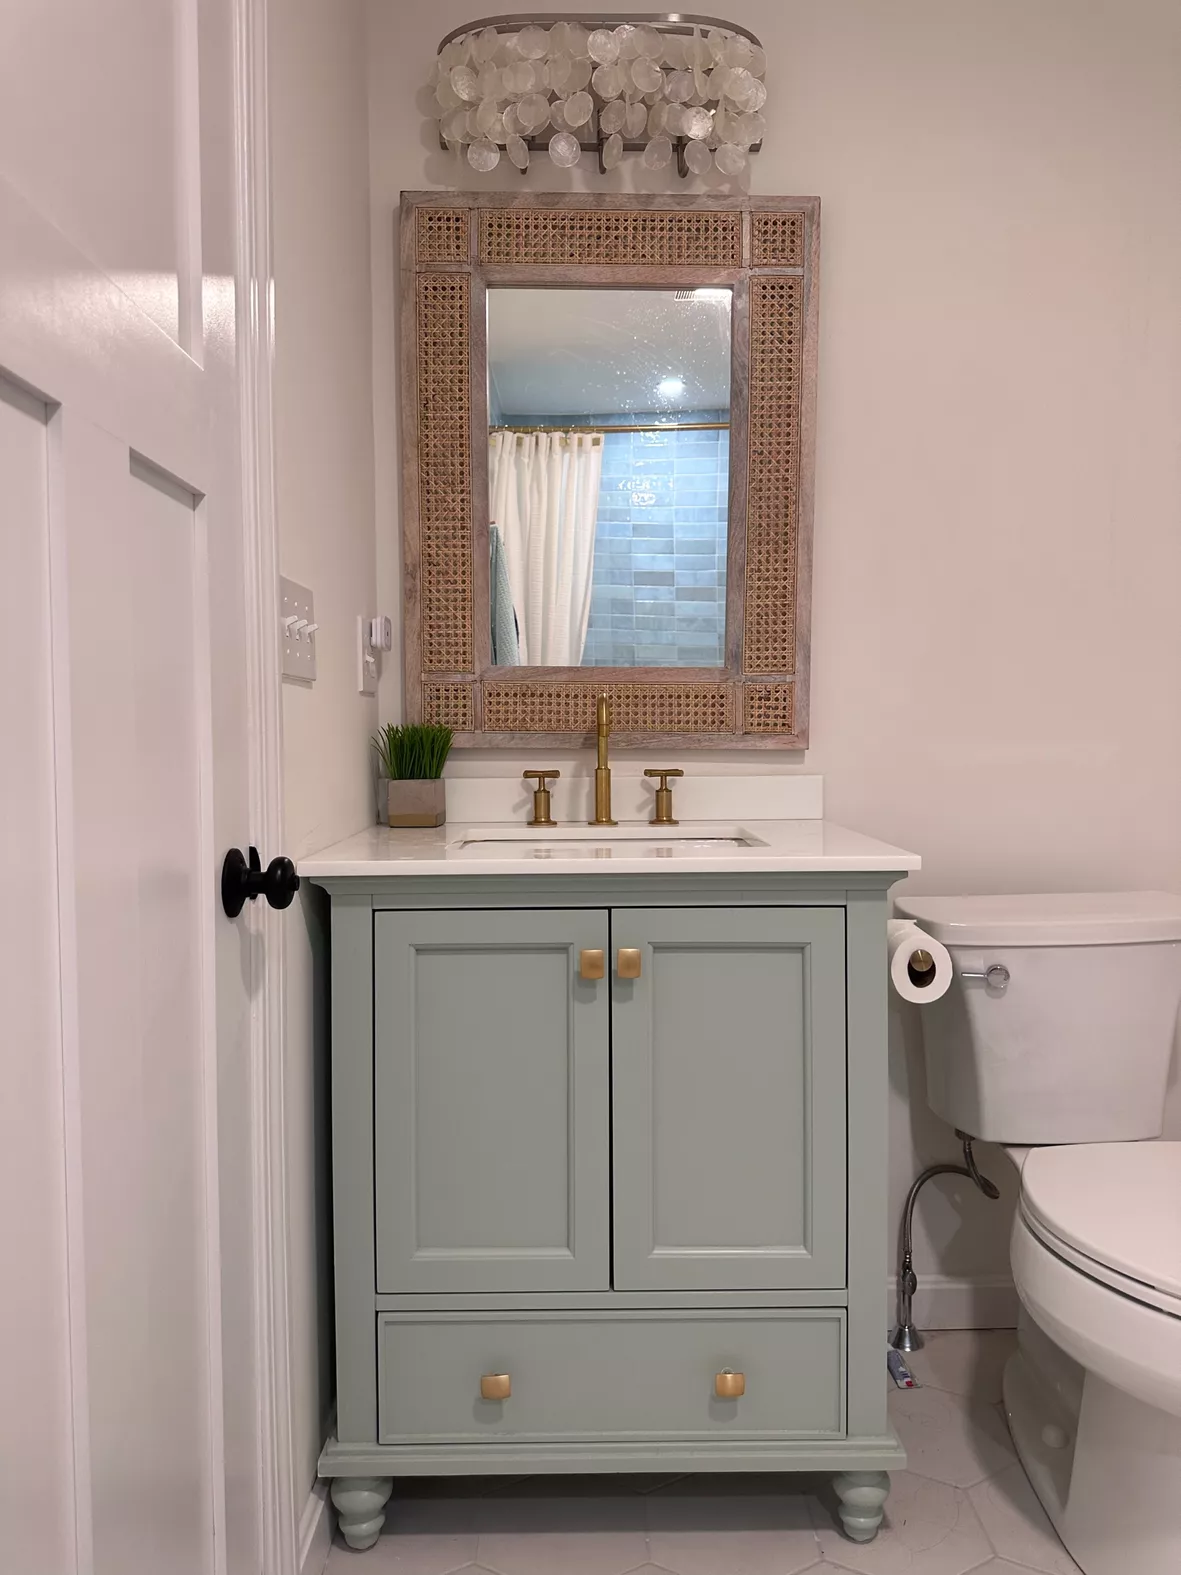 How To Style Bathroom Shelves - Jordecor